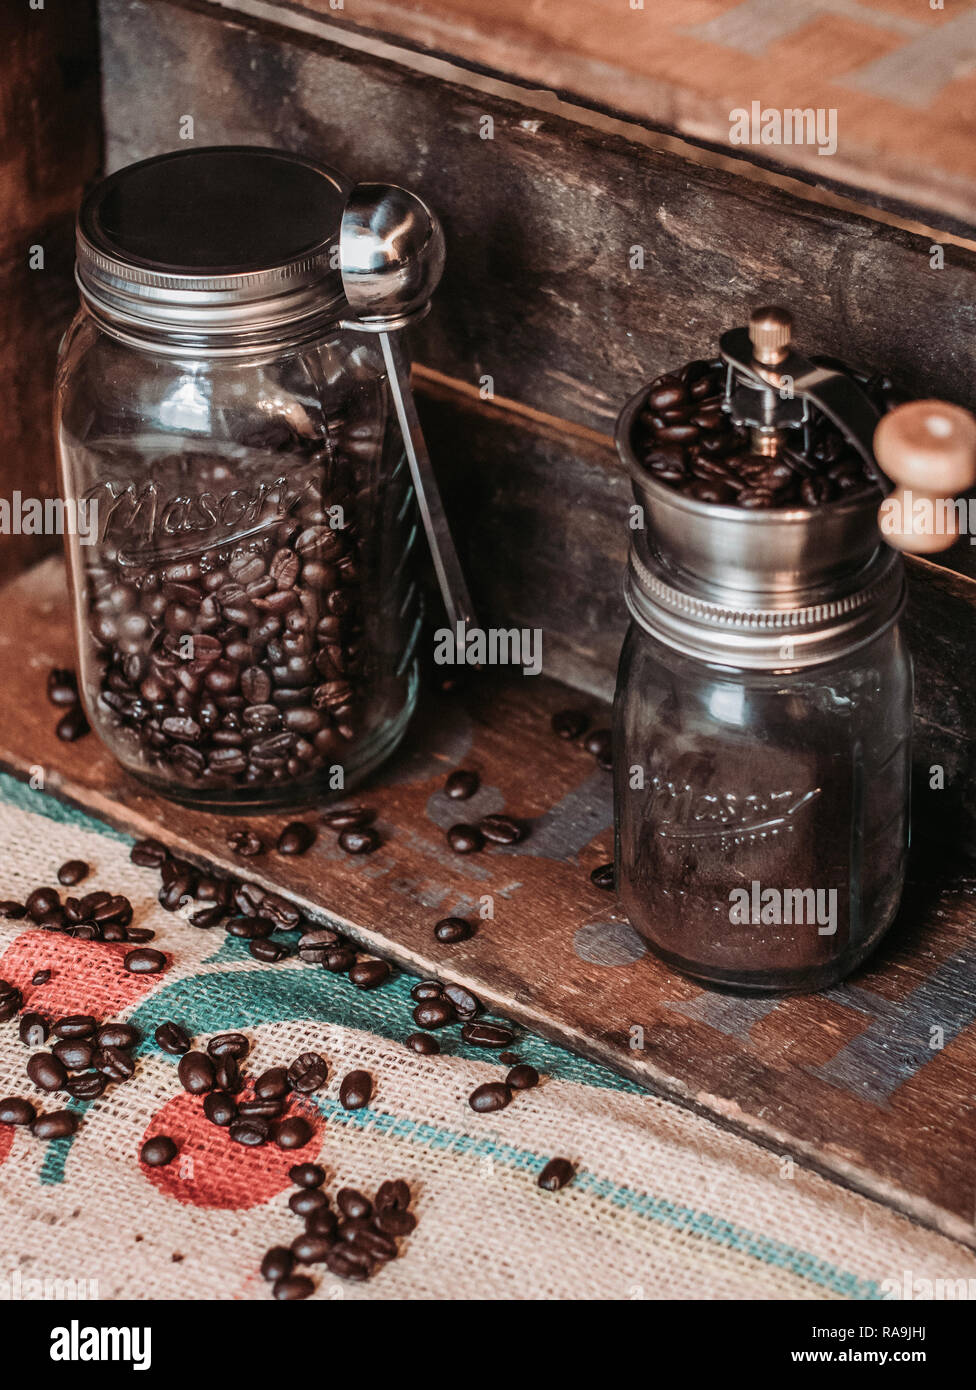 https://c8.alamy.com/comp/RA9JHJ/old-style-coffee-grinder-and-coffee-beans-in-mason-jars-RA9JHJ.jpg